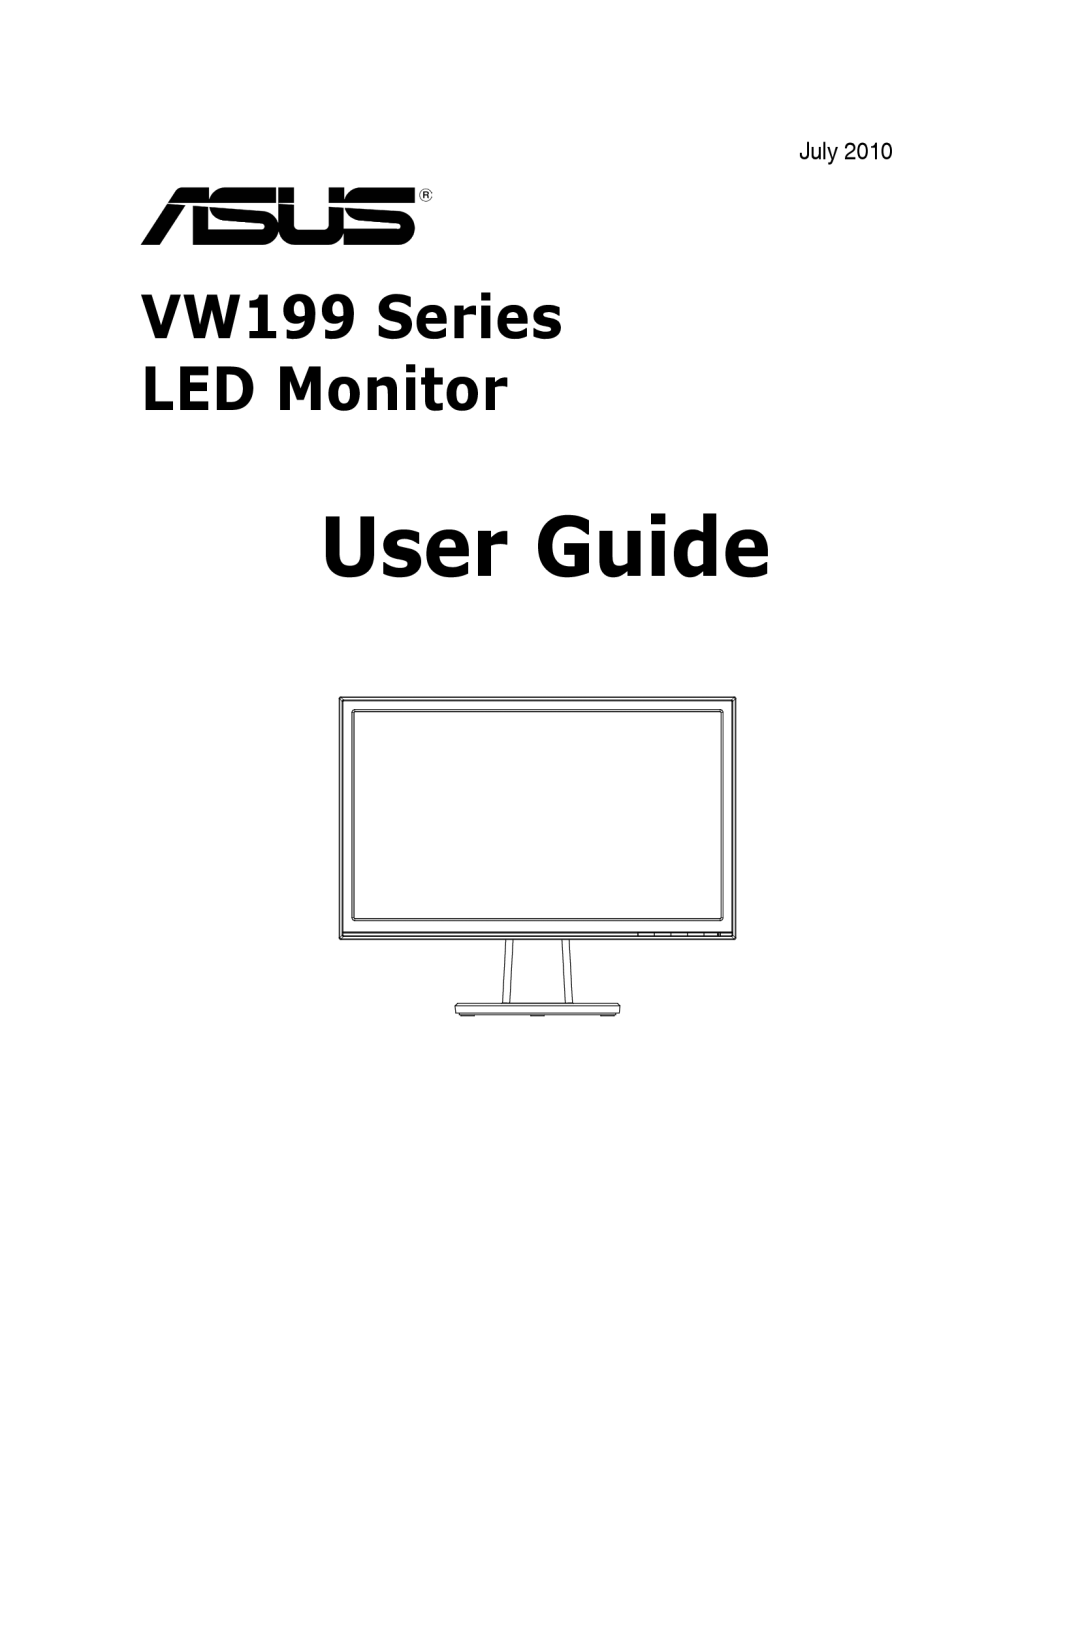 Sears manual User Guide, VW199 Series LED Monitor 